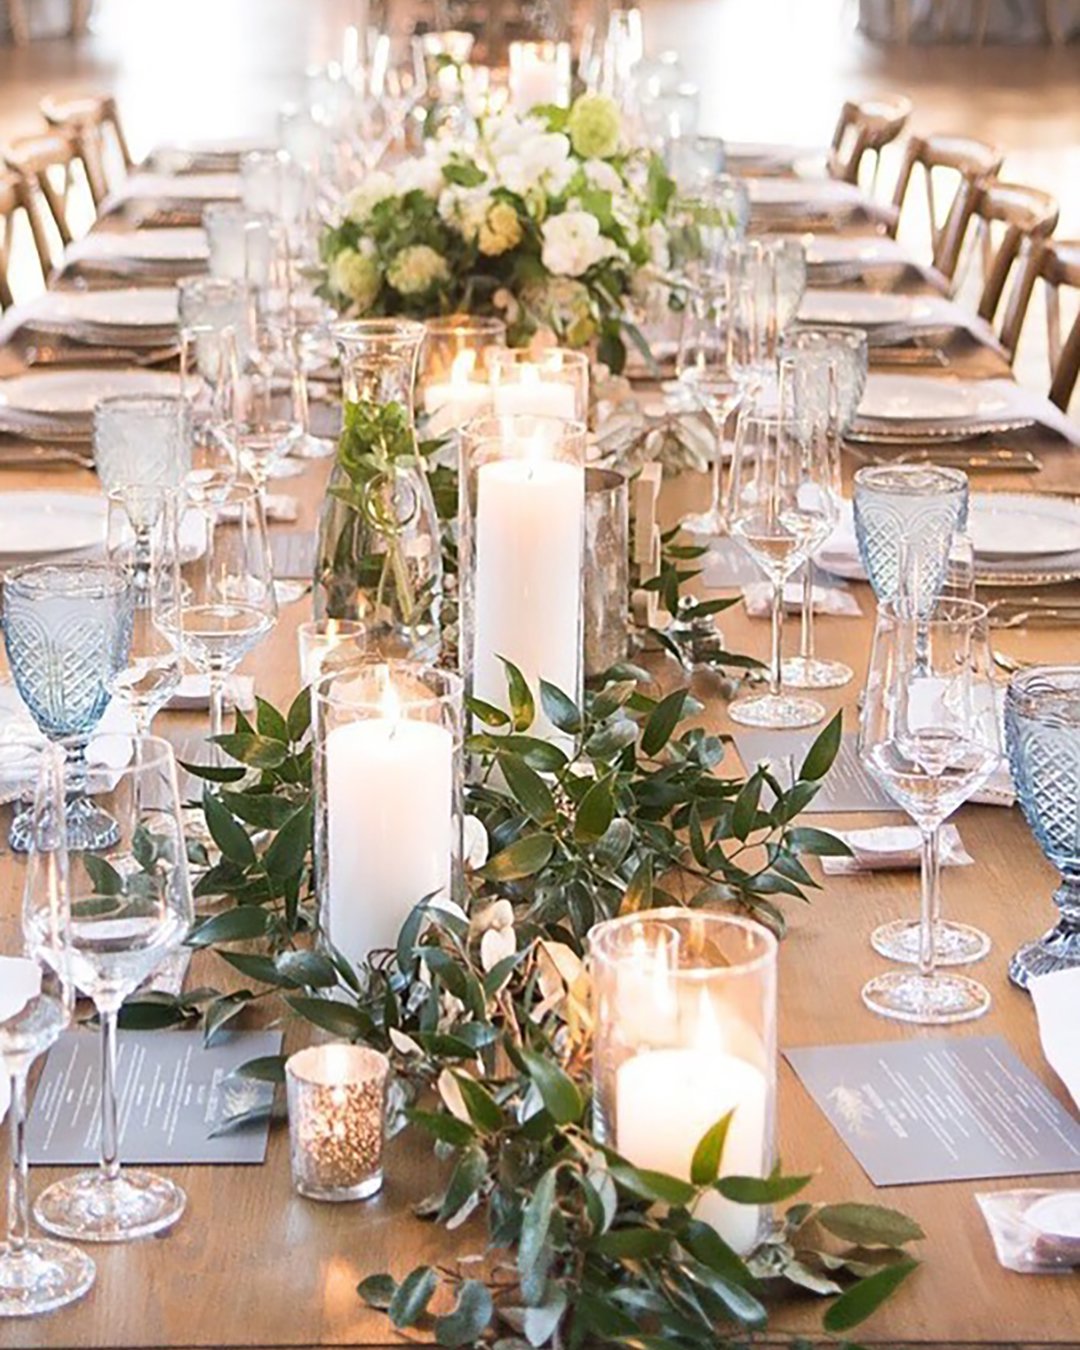 wedding table decorations minimal decor with greenety adn0candles-jacklooneyweddings